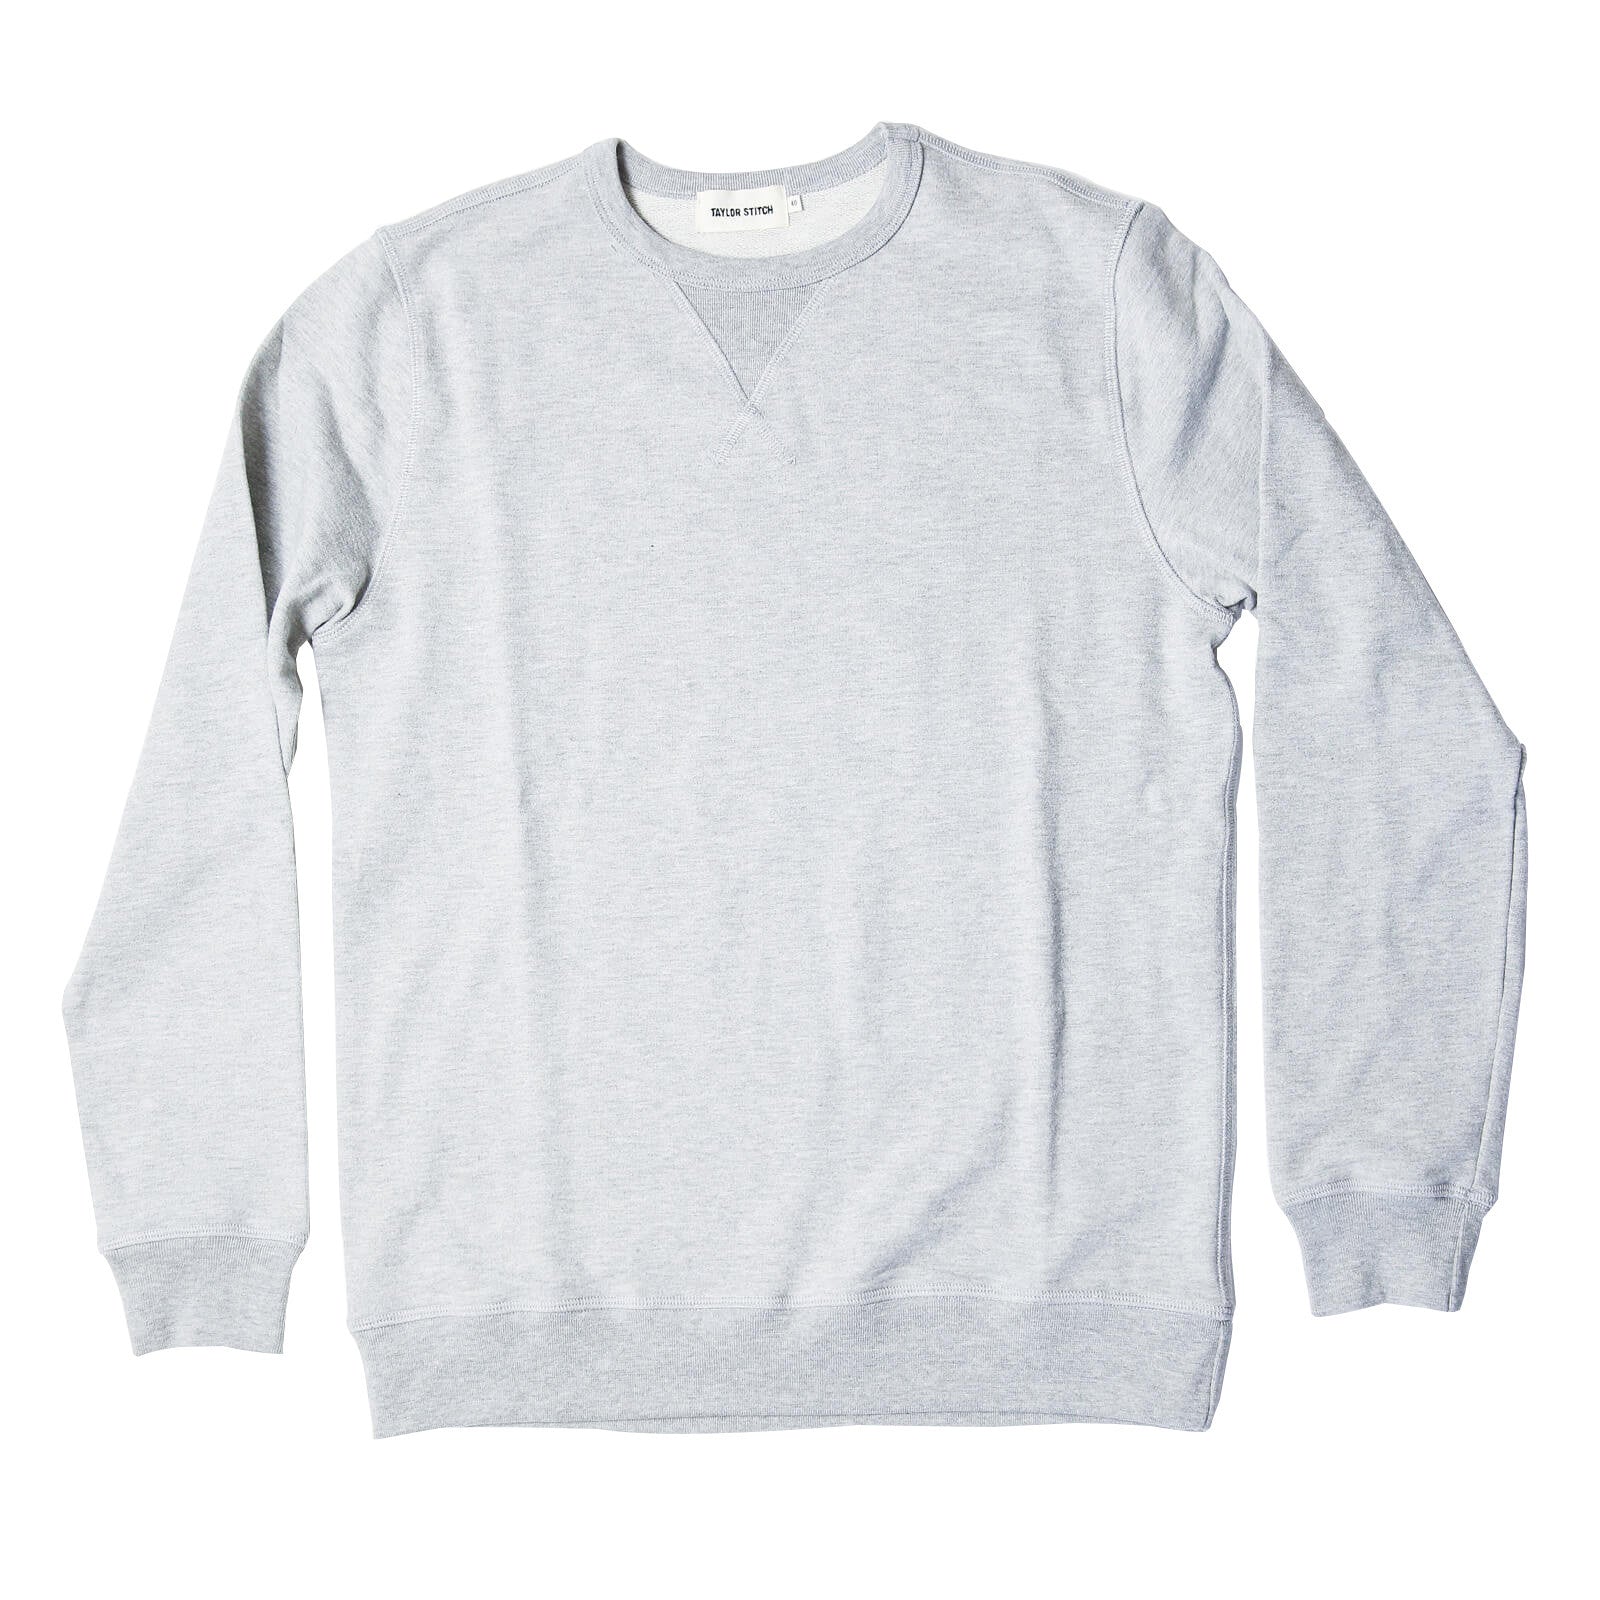 French Terry Crewneck Sweatshirt - Grey